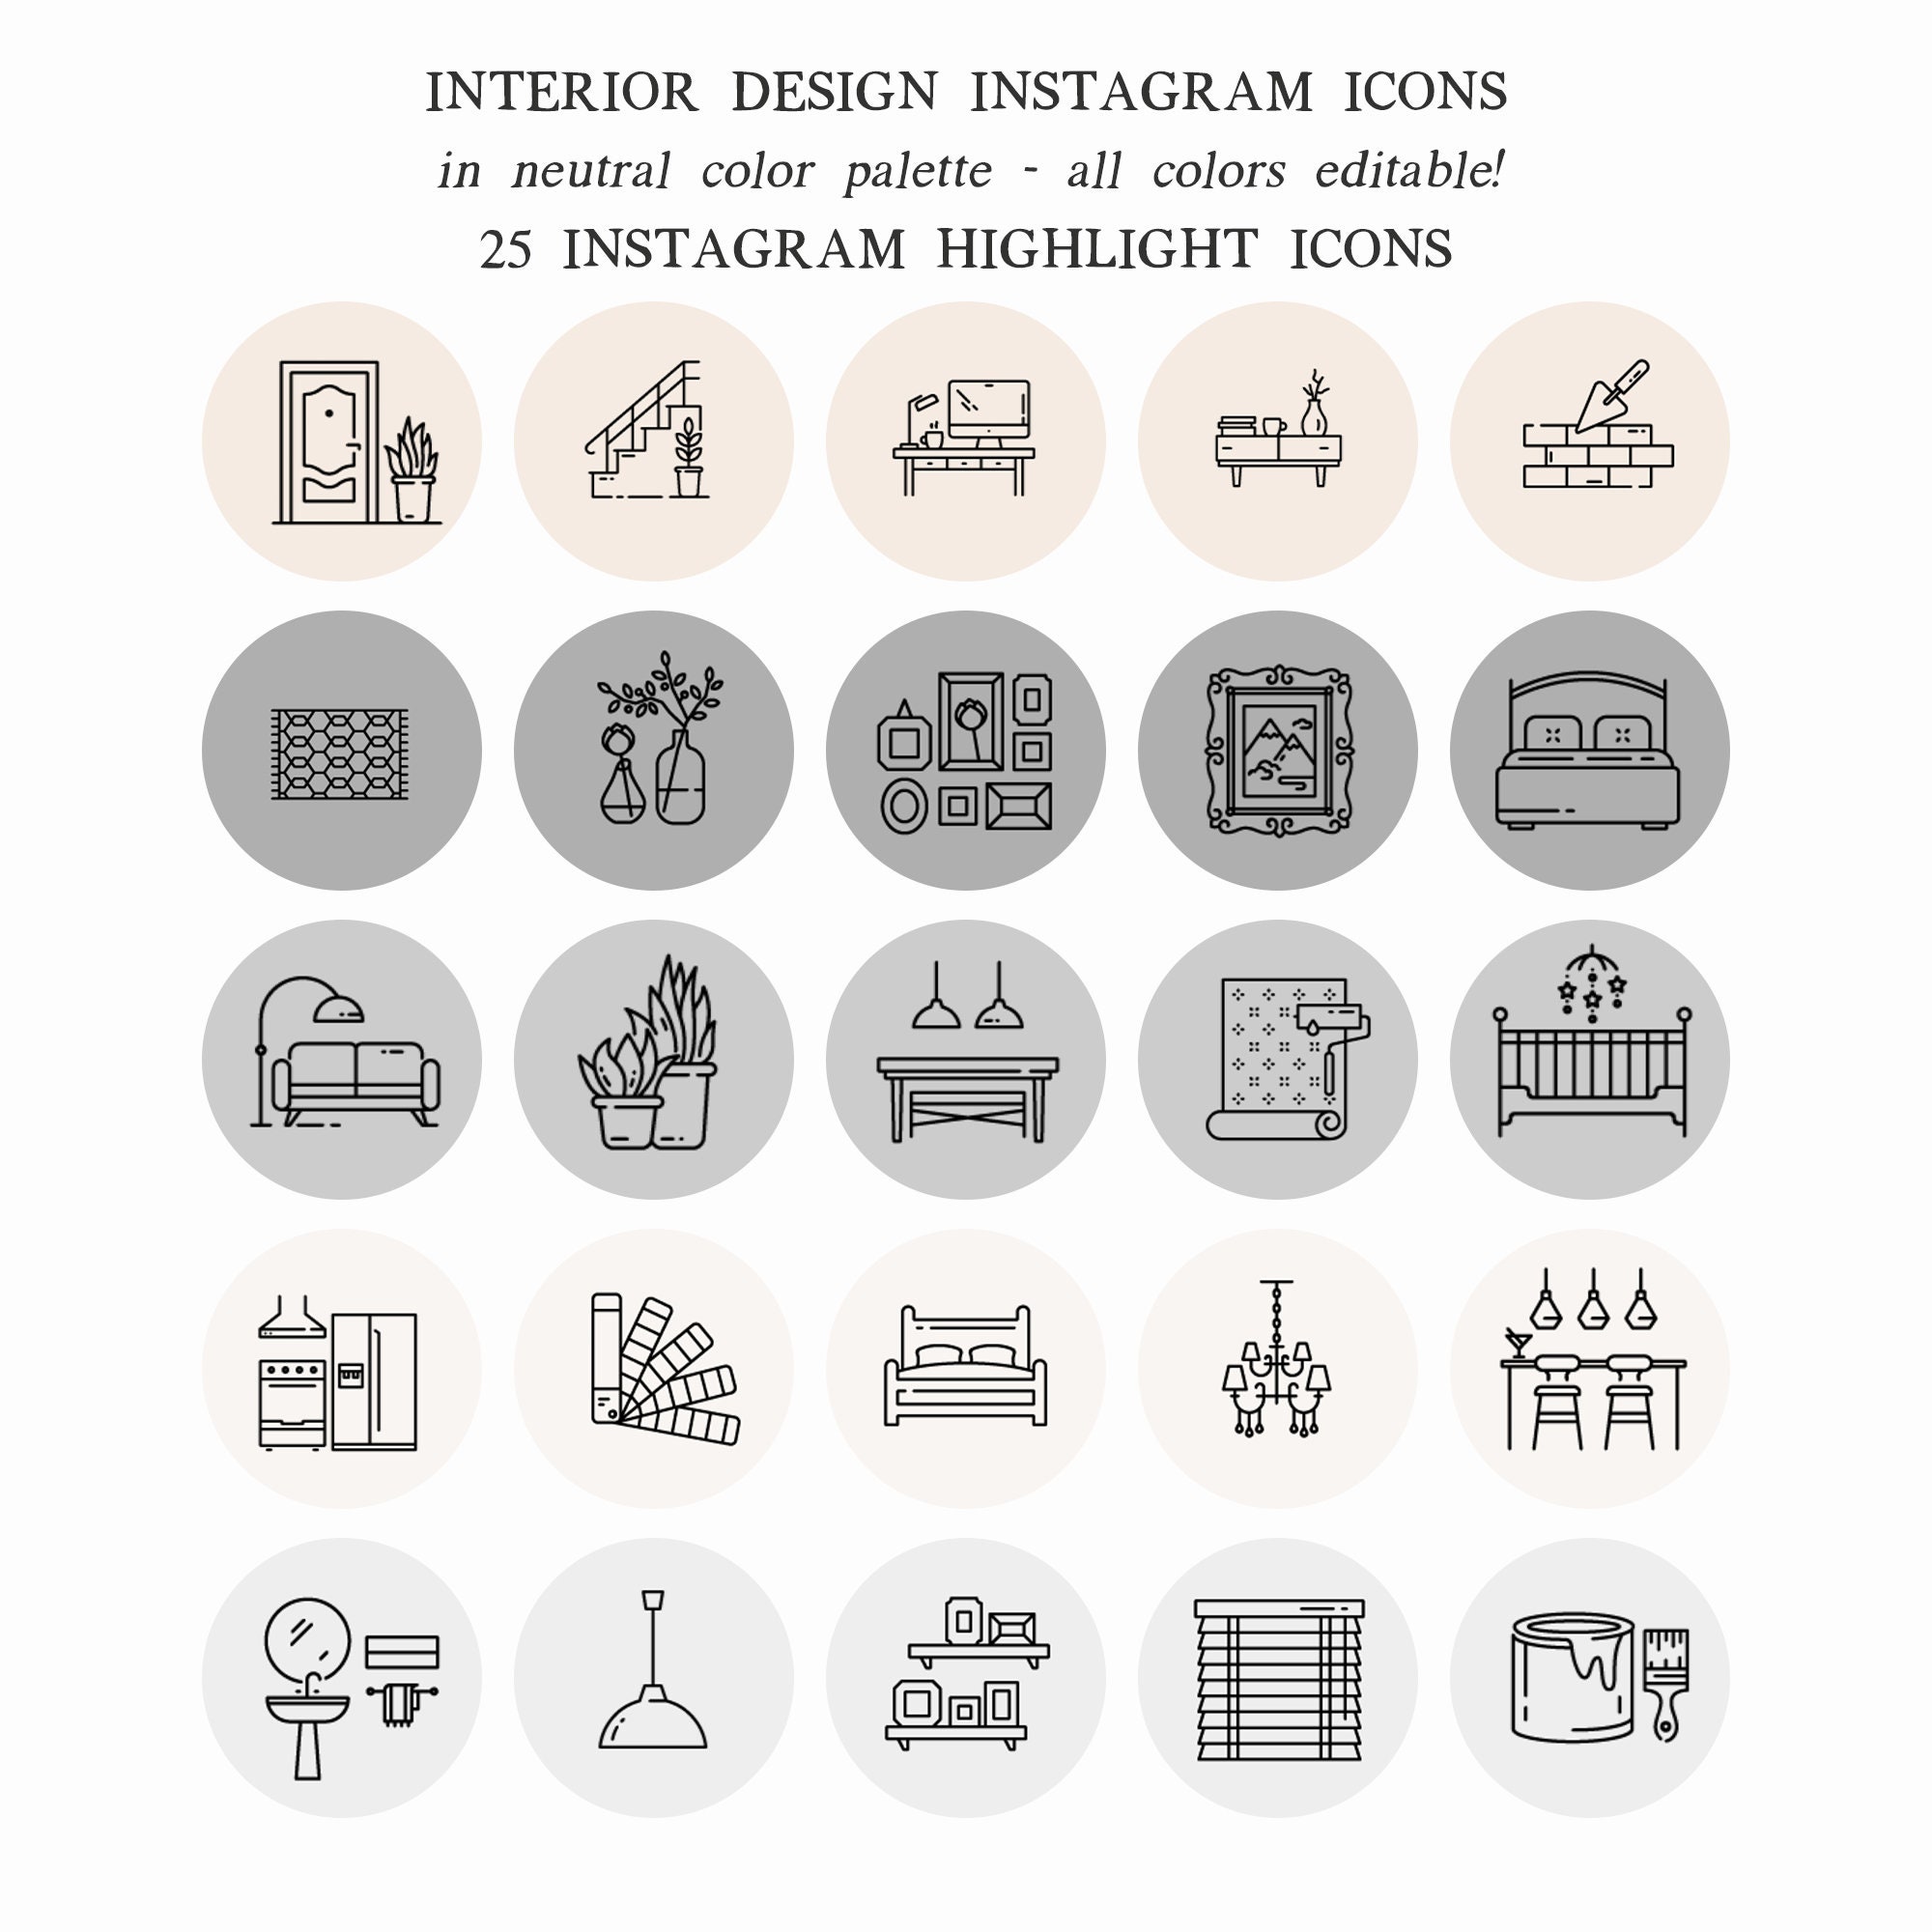 Interior Design Story Instagram Story Icons Lifestyle Blogger Home Decor Icons Instagram Highlight Icons Interior Design Highlights